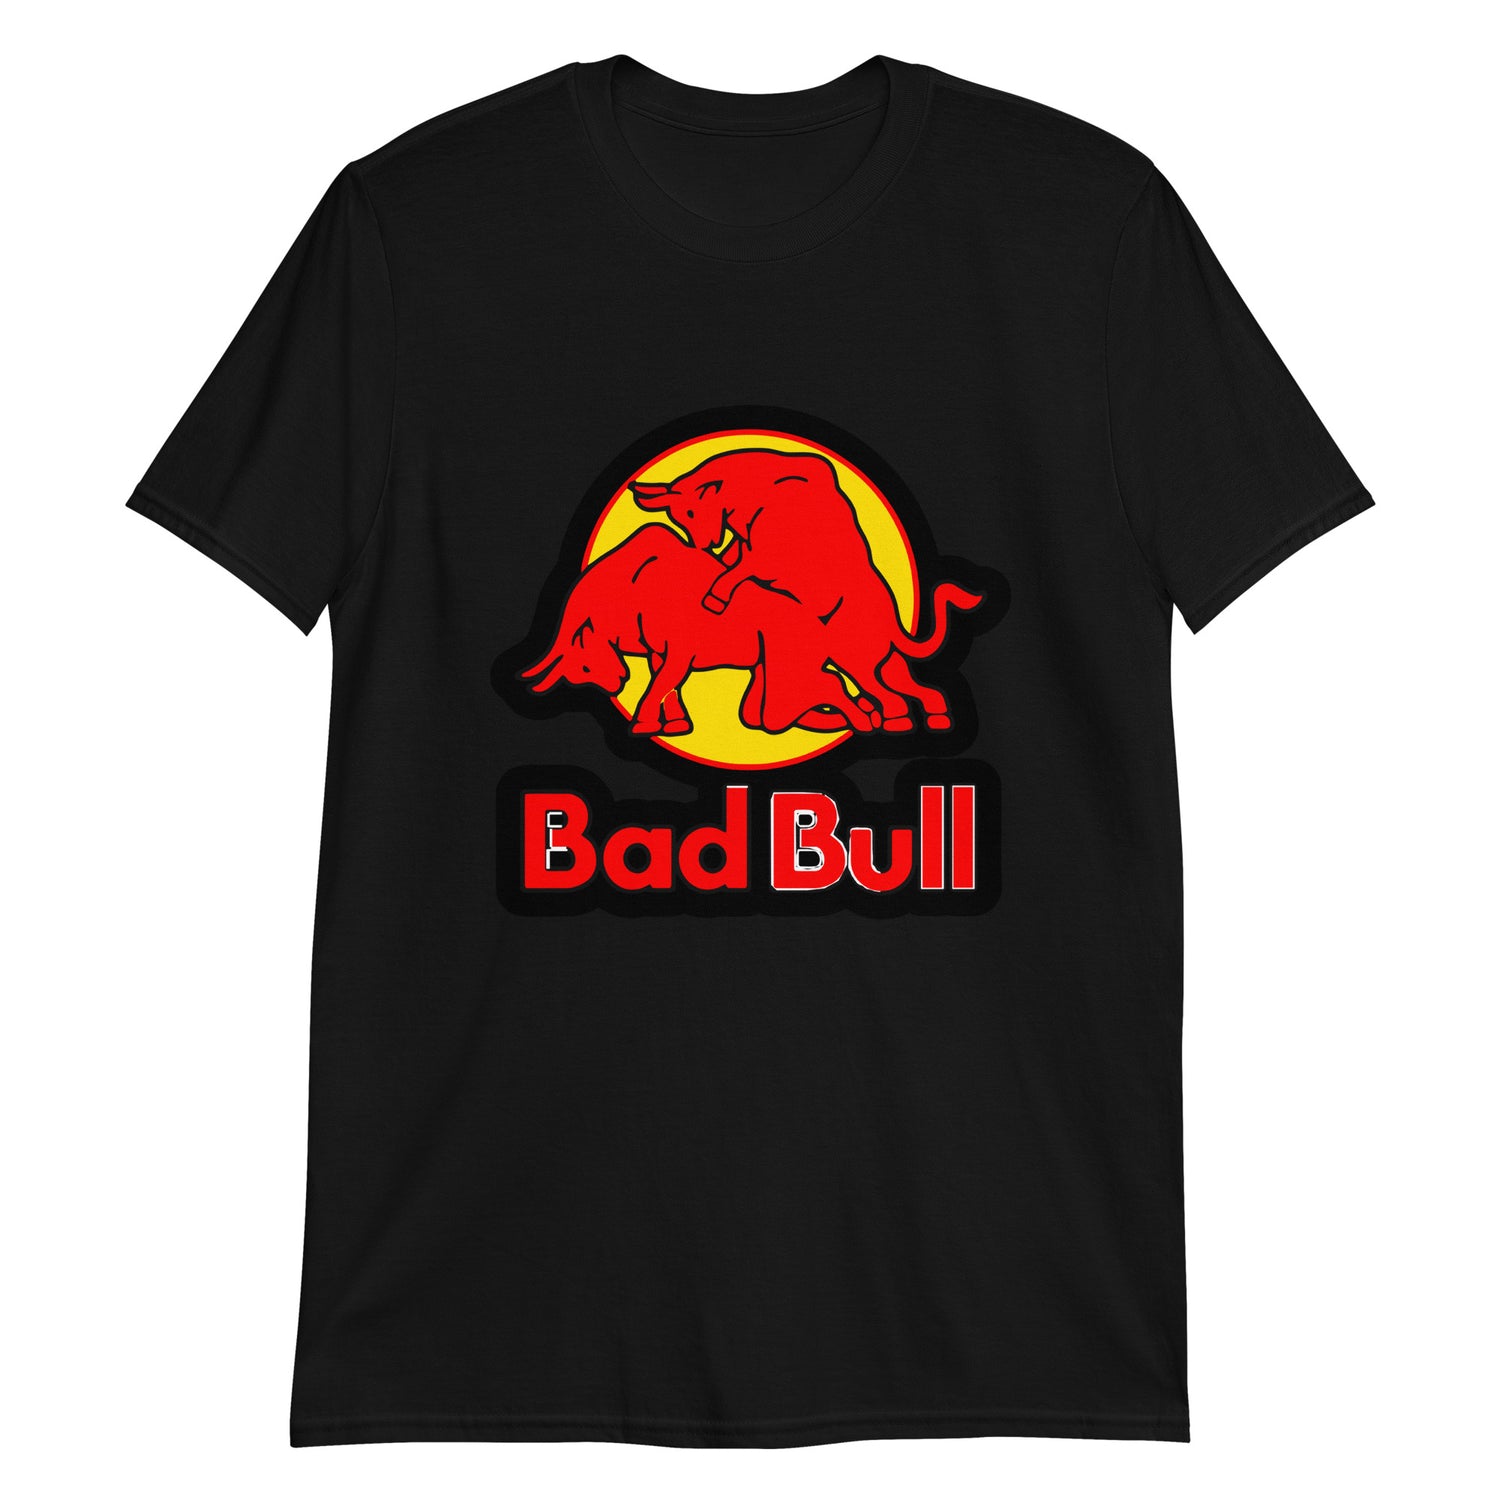 Bad Bull T-Shirt - PrintWave Tees